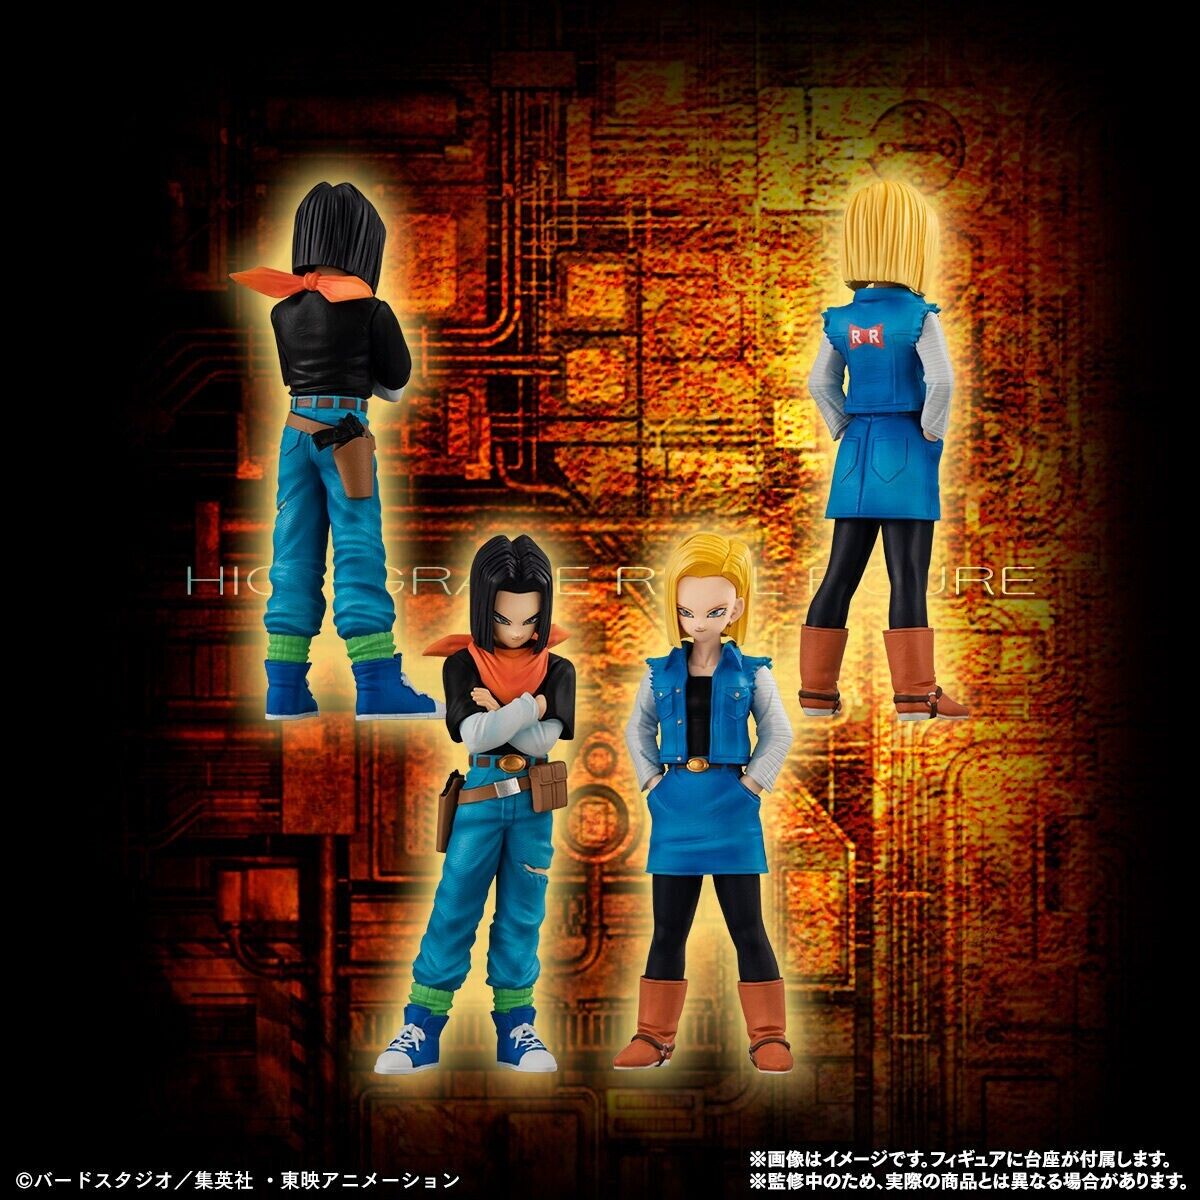 Dragon Ball Z - HG Android Figures Set - Preorder Still Available on  meccha-japan! #DragonBall #DragonBallZ